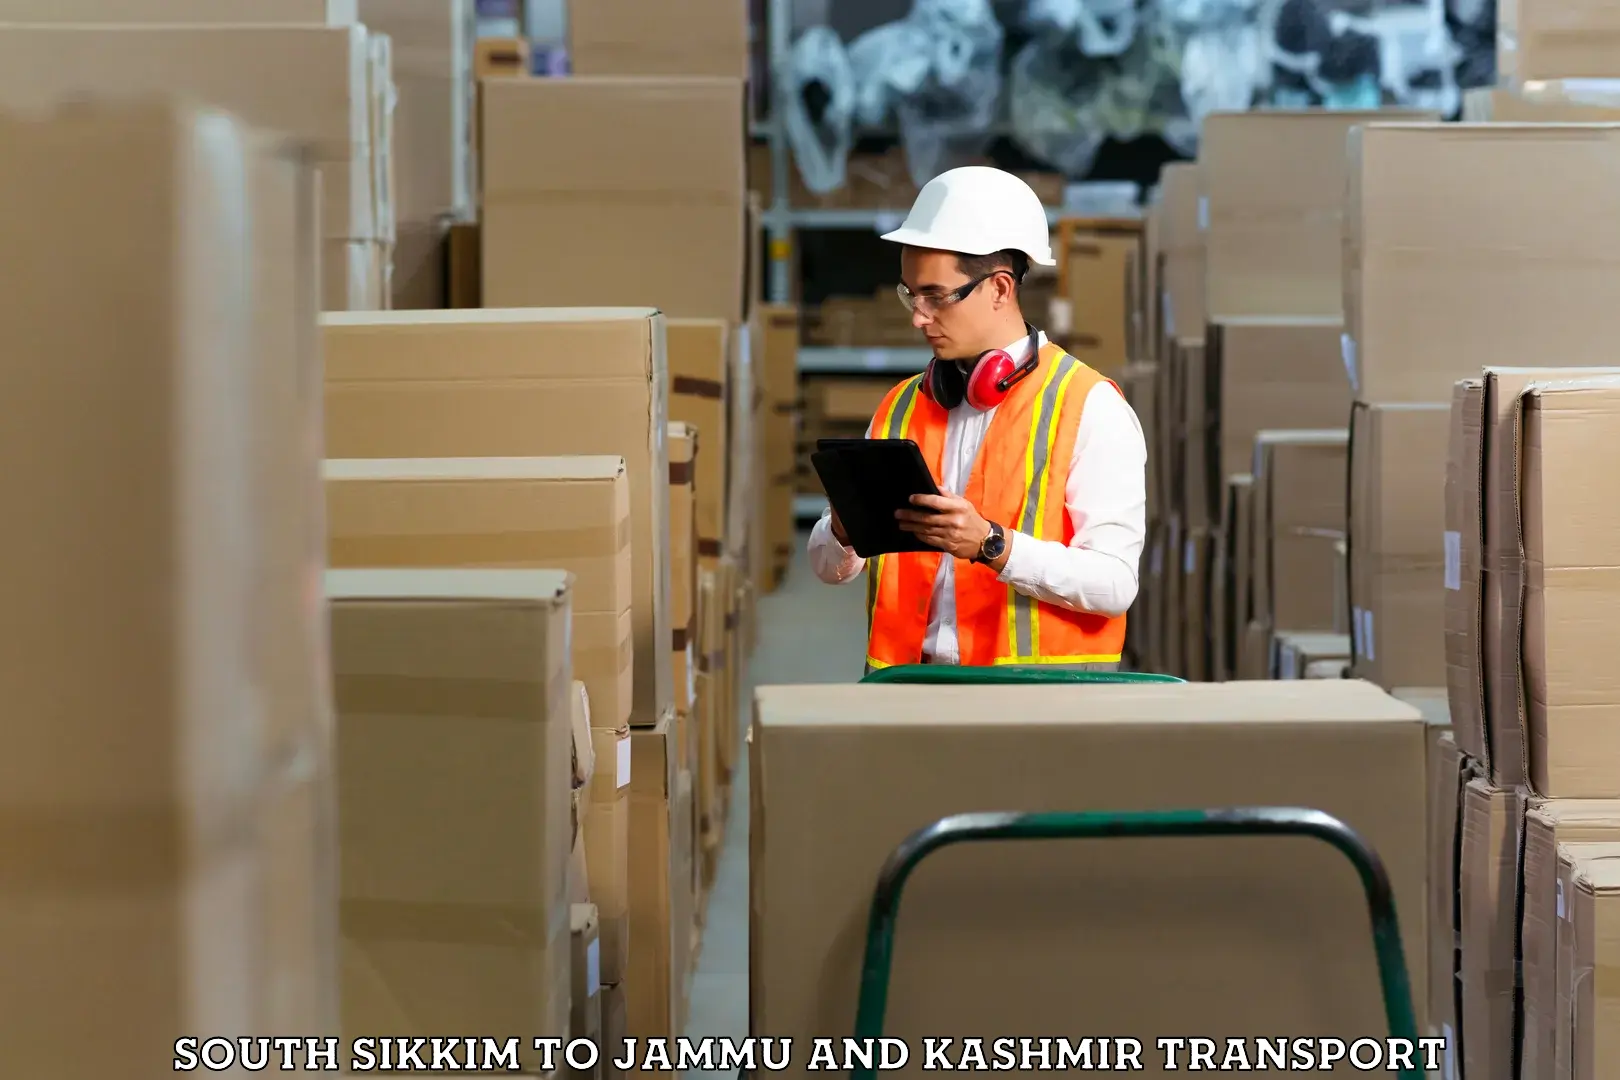 Bike shipping service South Sikkim to Jammu and Kashmir